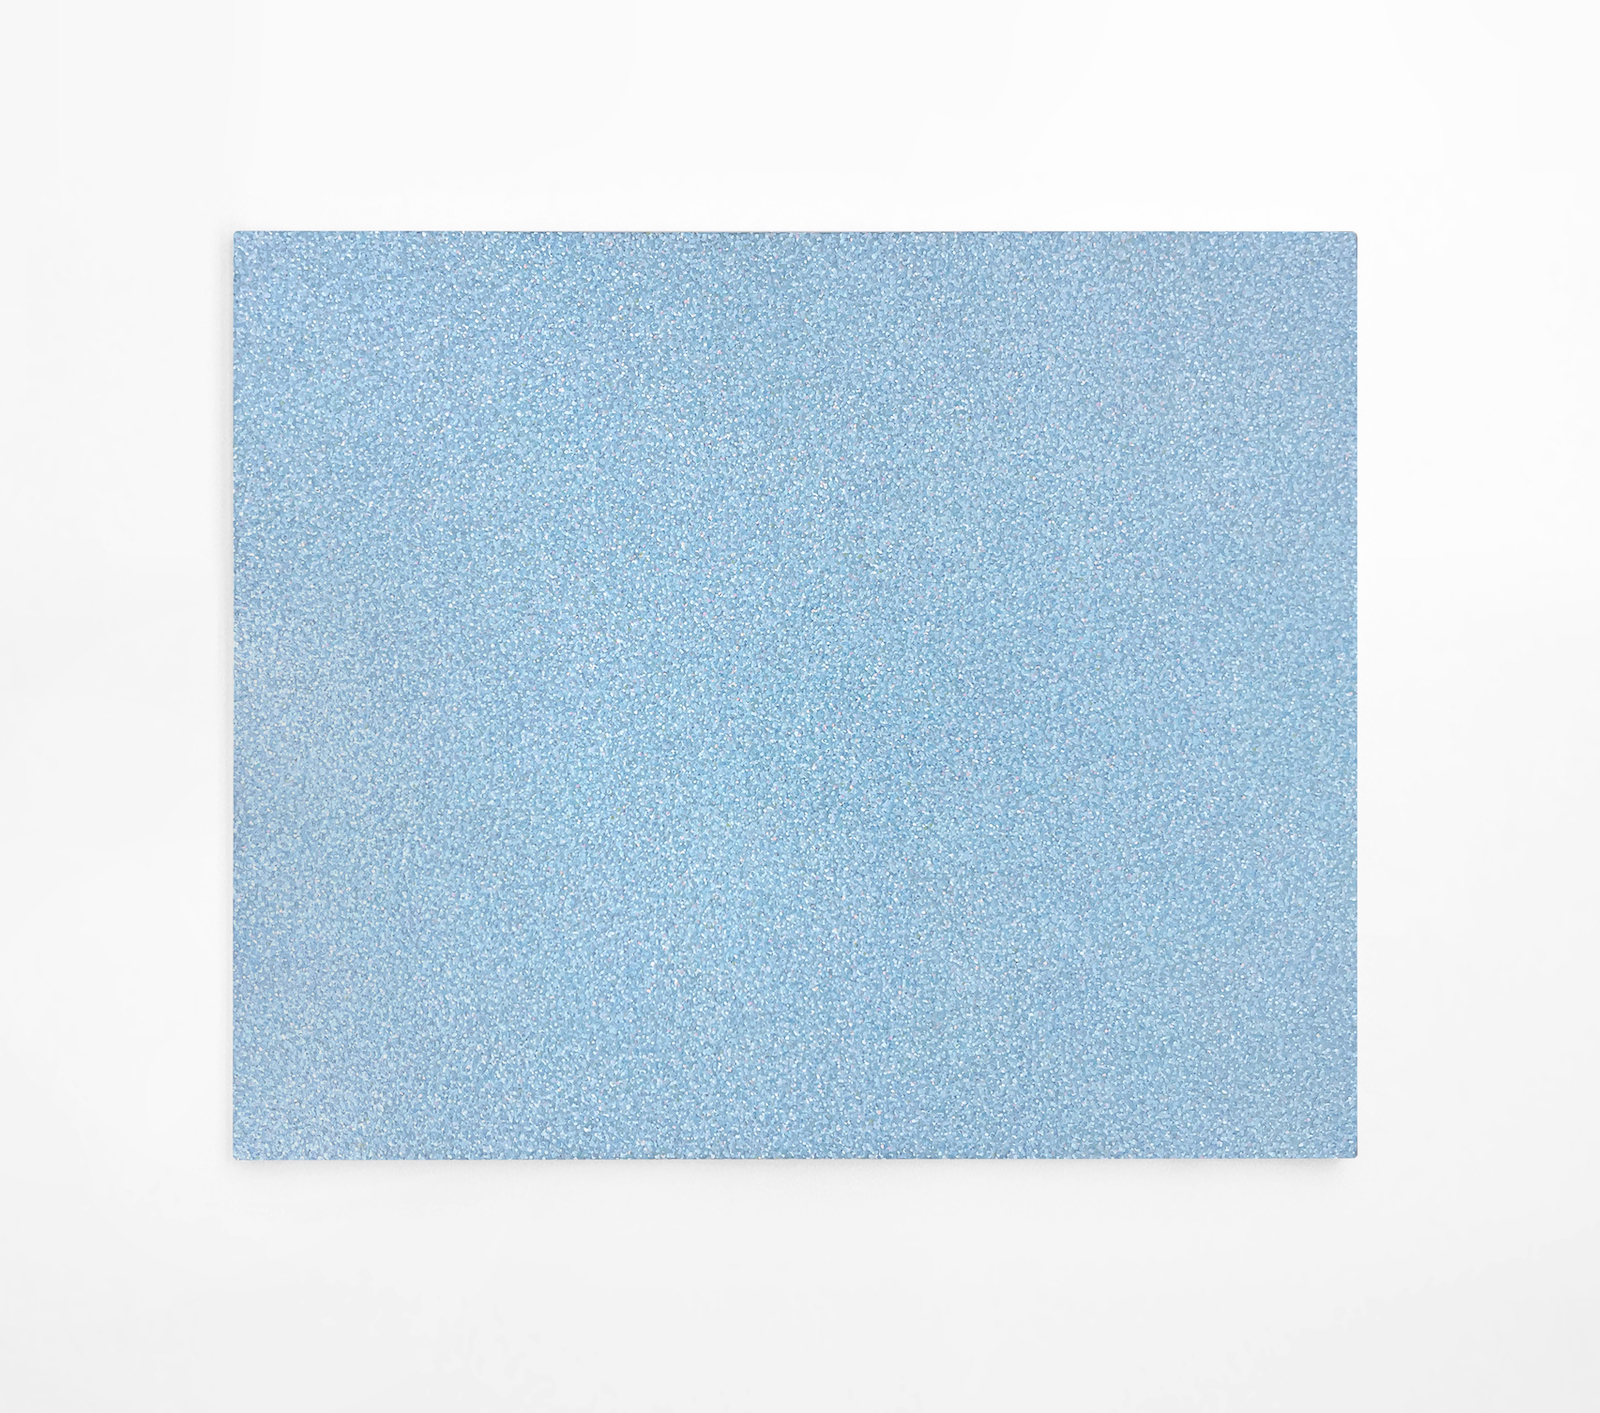 Untitled blue 02, 2020-2023